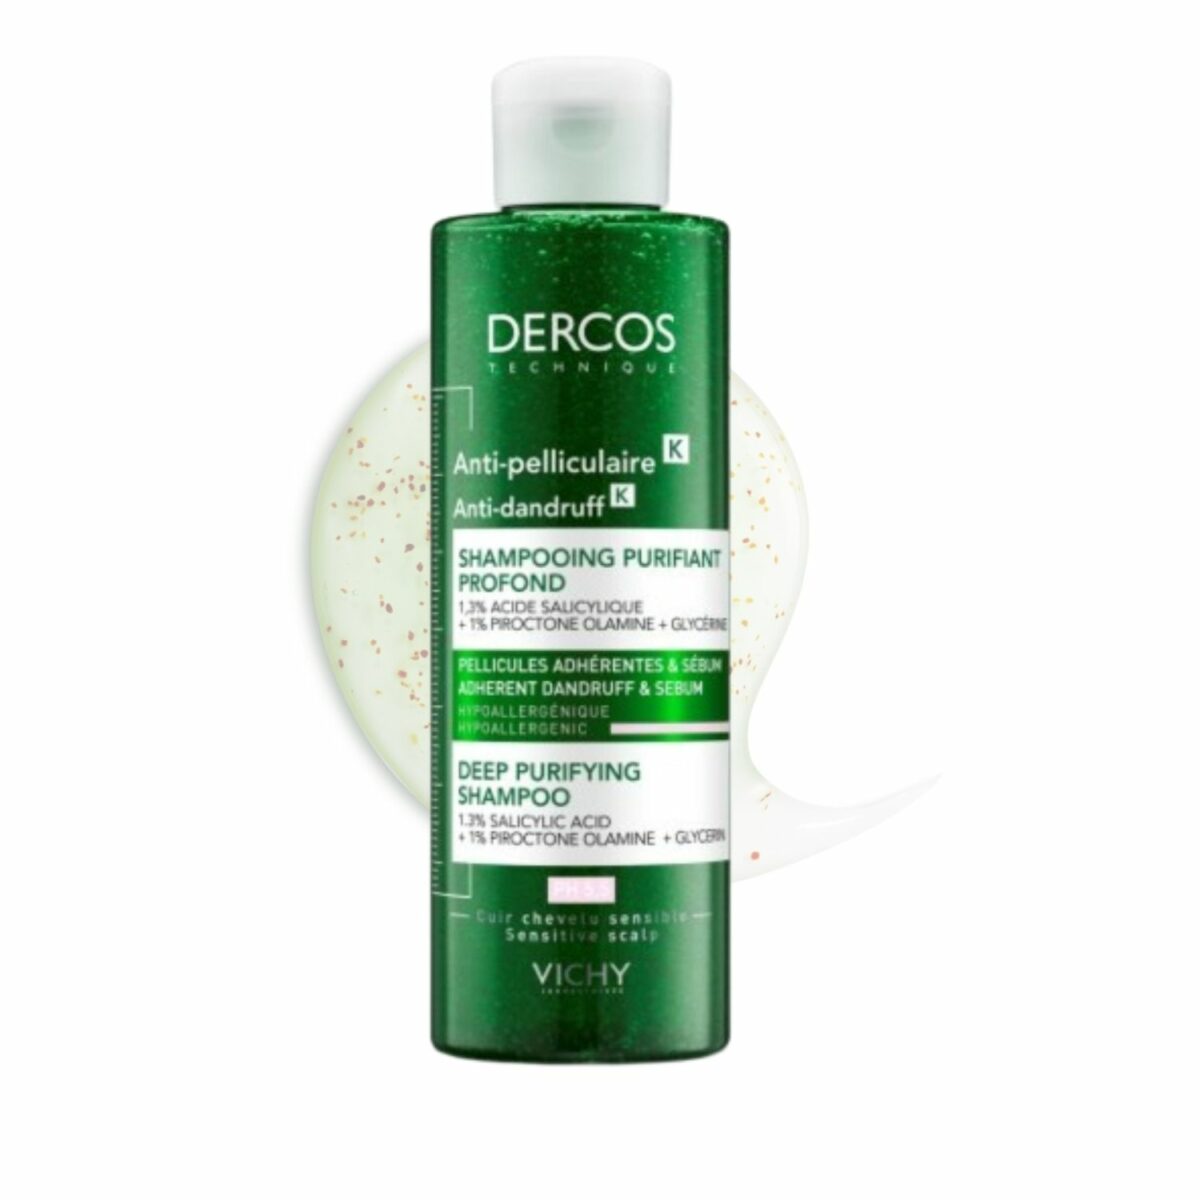 VICHY DERCOS ANTI-DANDRUFF K Šampon za dubinsko čišćenje protiv prianjajuće peruti i sebuma, 250 ml